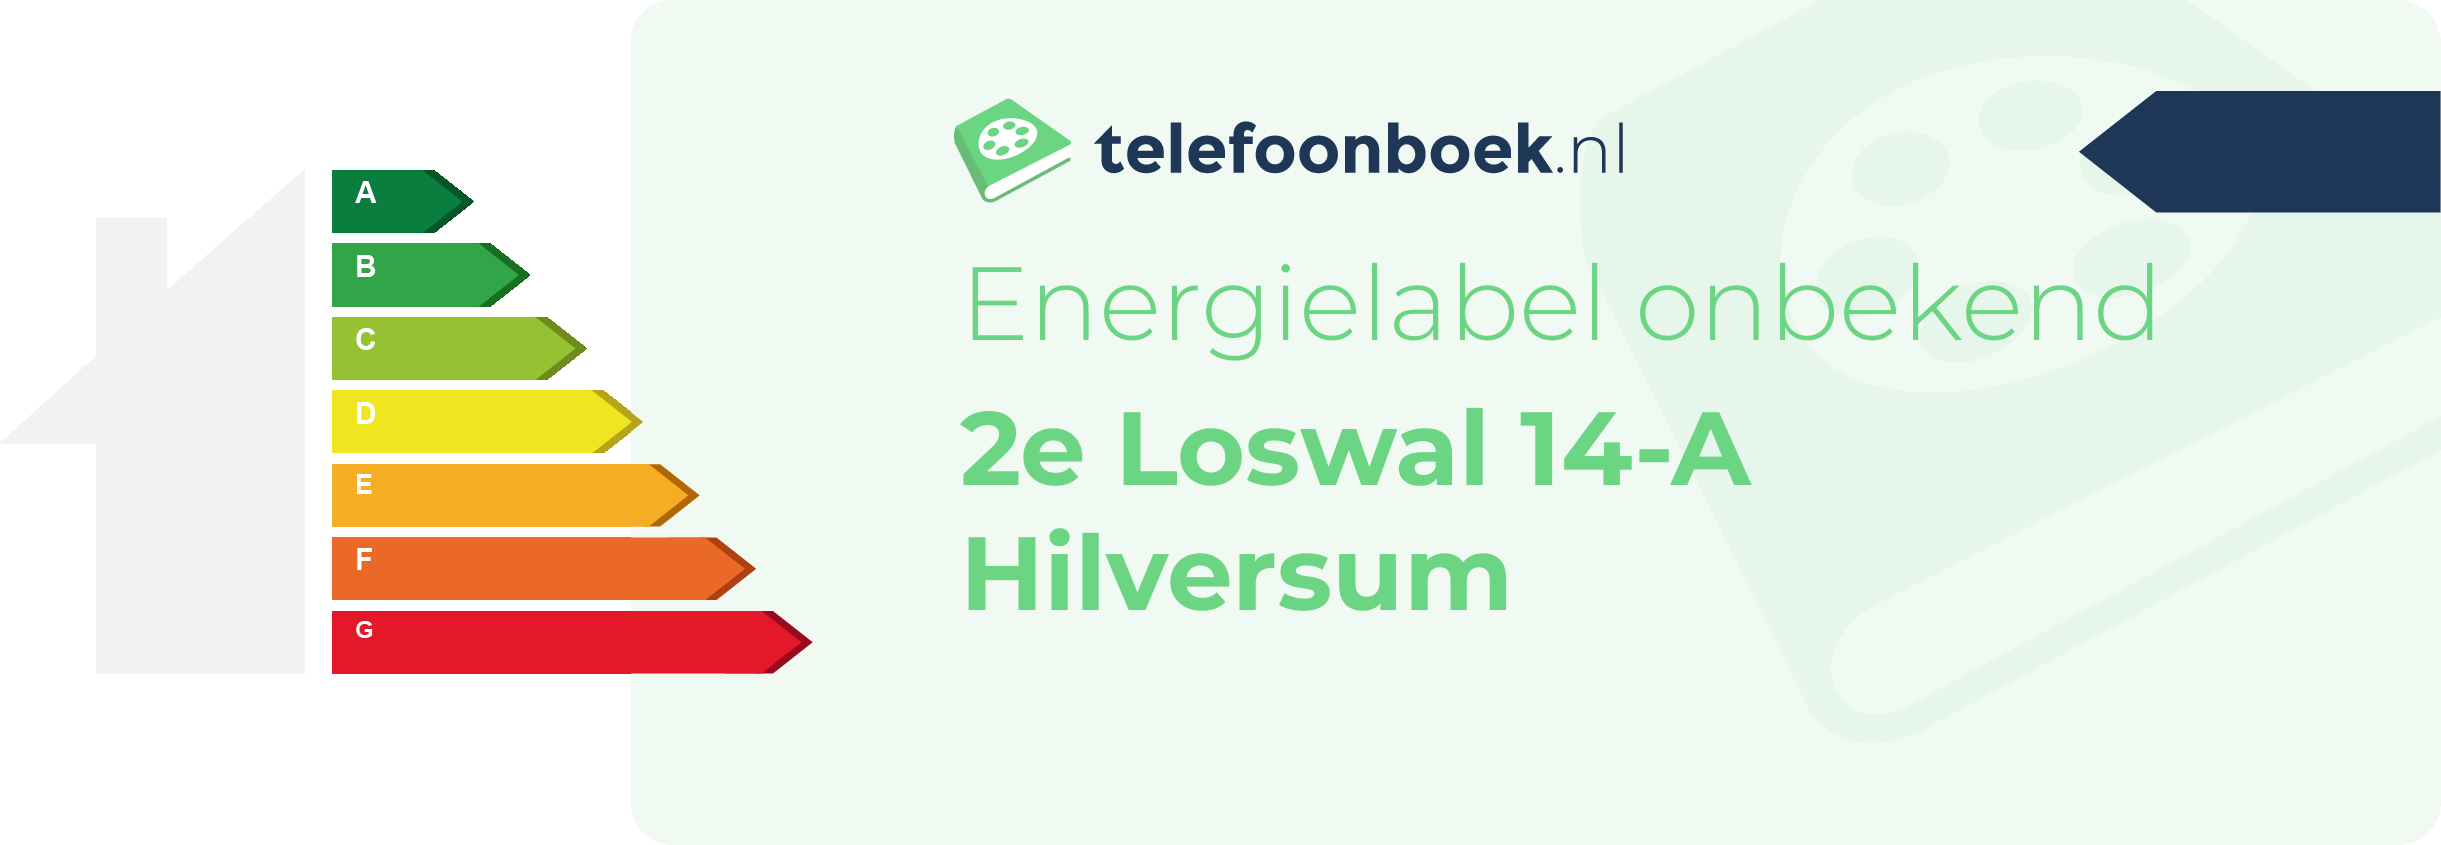 Energielabel 2e Loswal 14-A Hilversum